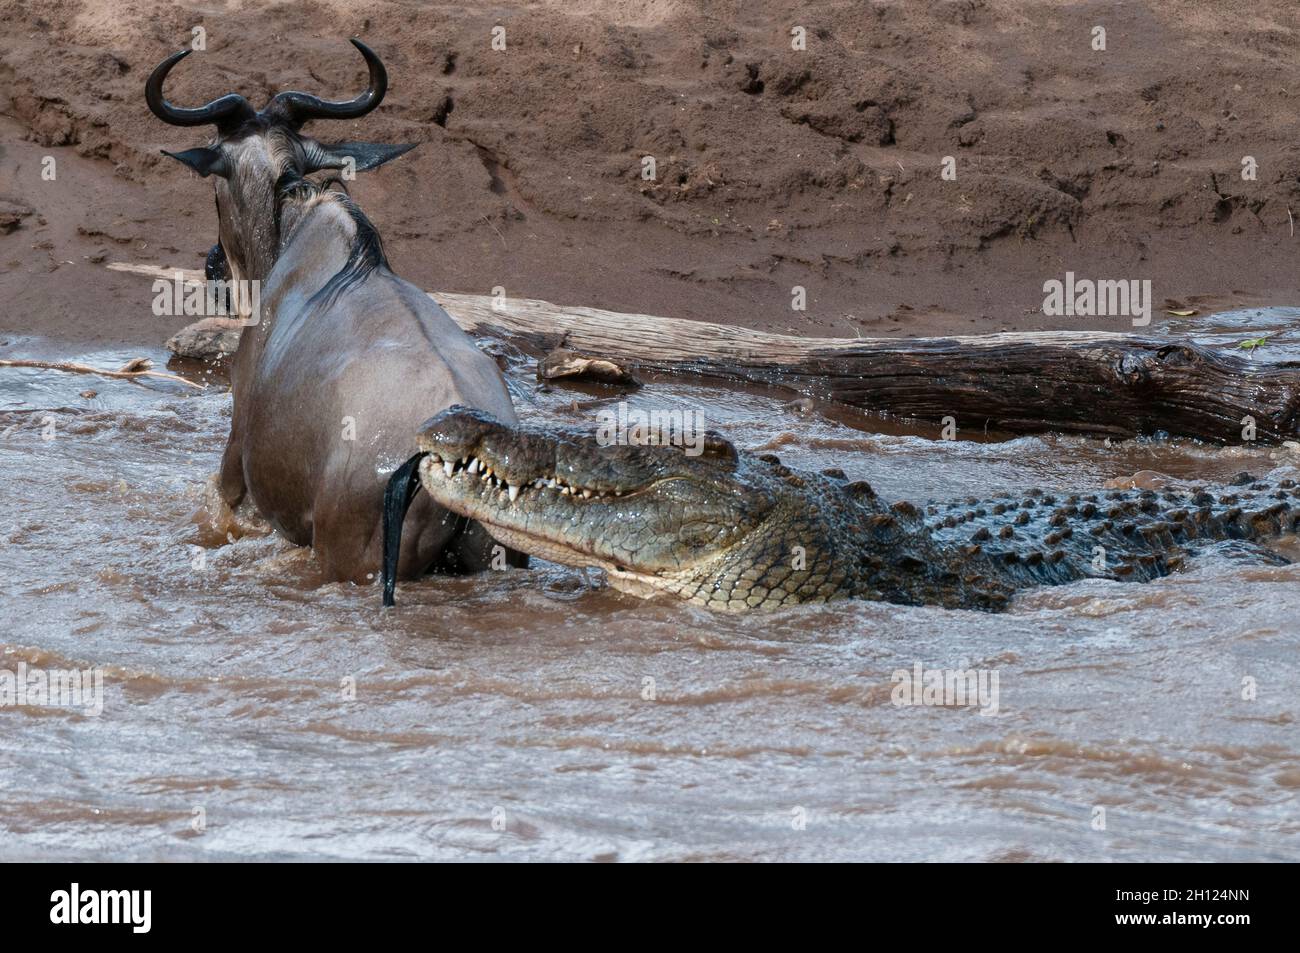 A Nile crocodile, Crocodilus niloticus, attacking a wildebeest, Connochaetes taurinus, crossing the Mara River. Mara River, Masai Mara National Reserv Stock Photo